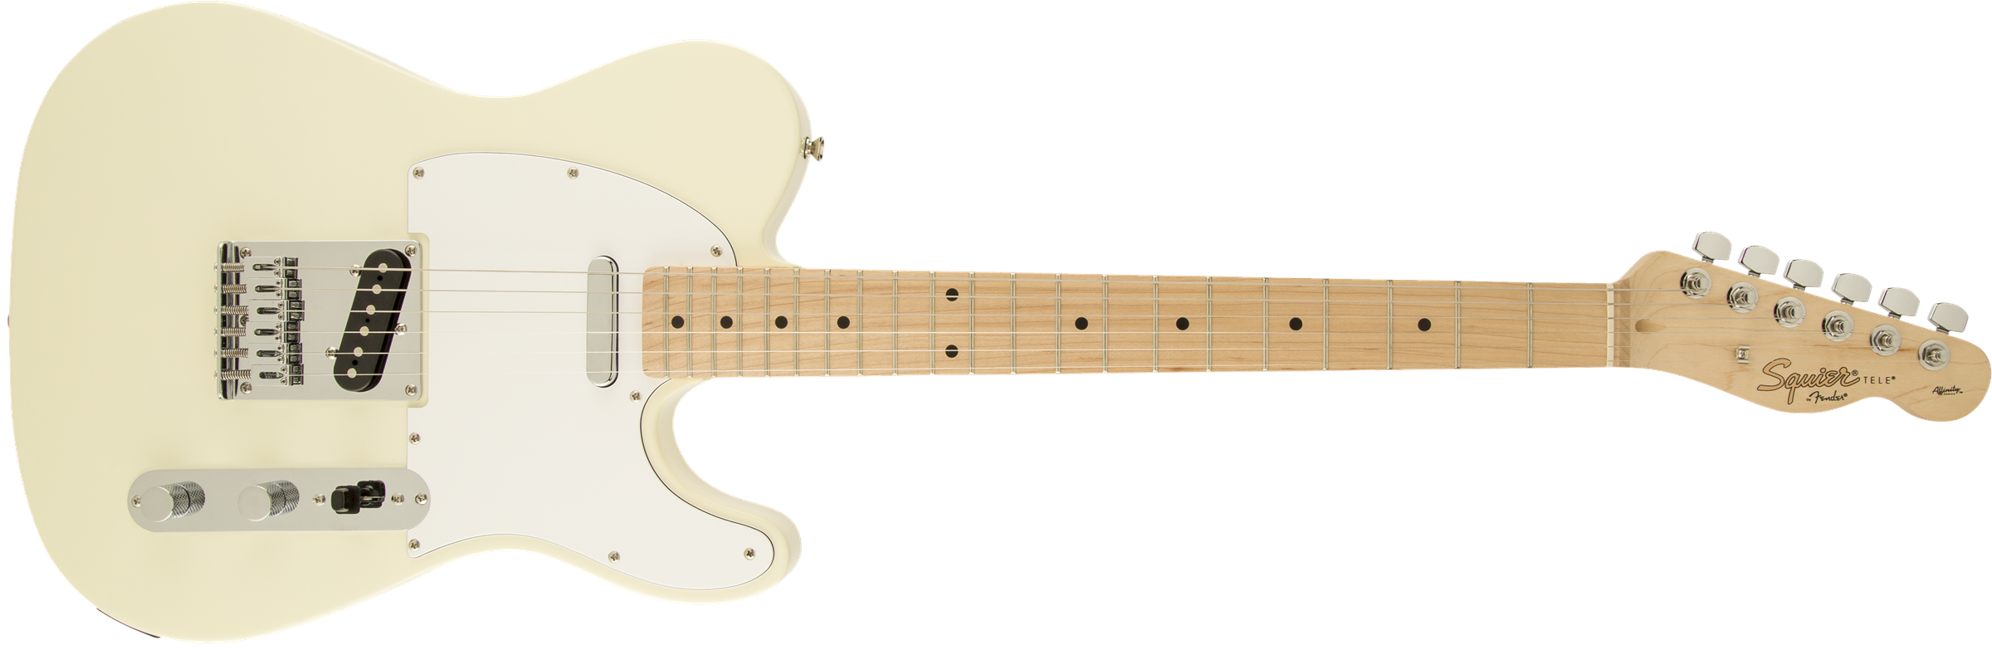 Squier By Fender - Affinity Telecaster - Elektrisk Guitar (Arctic White)